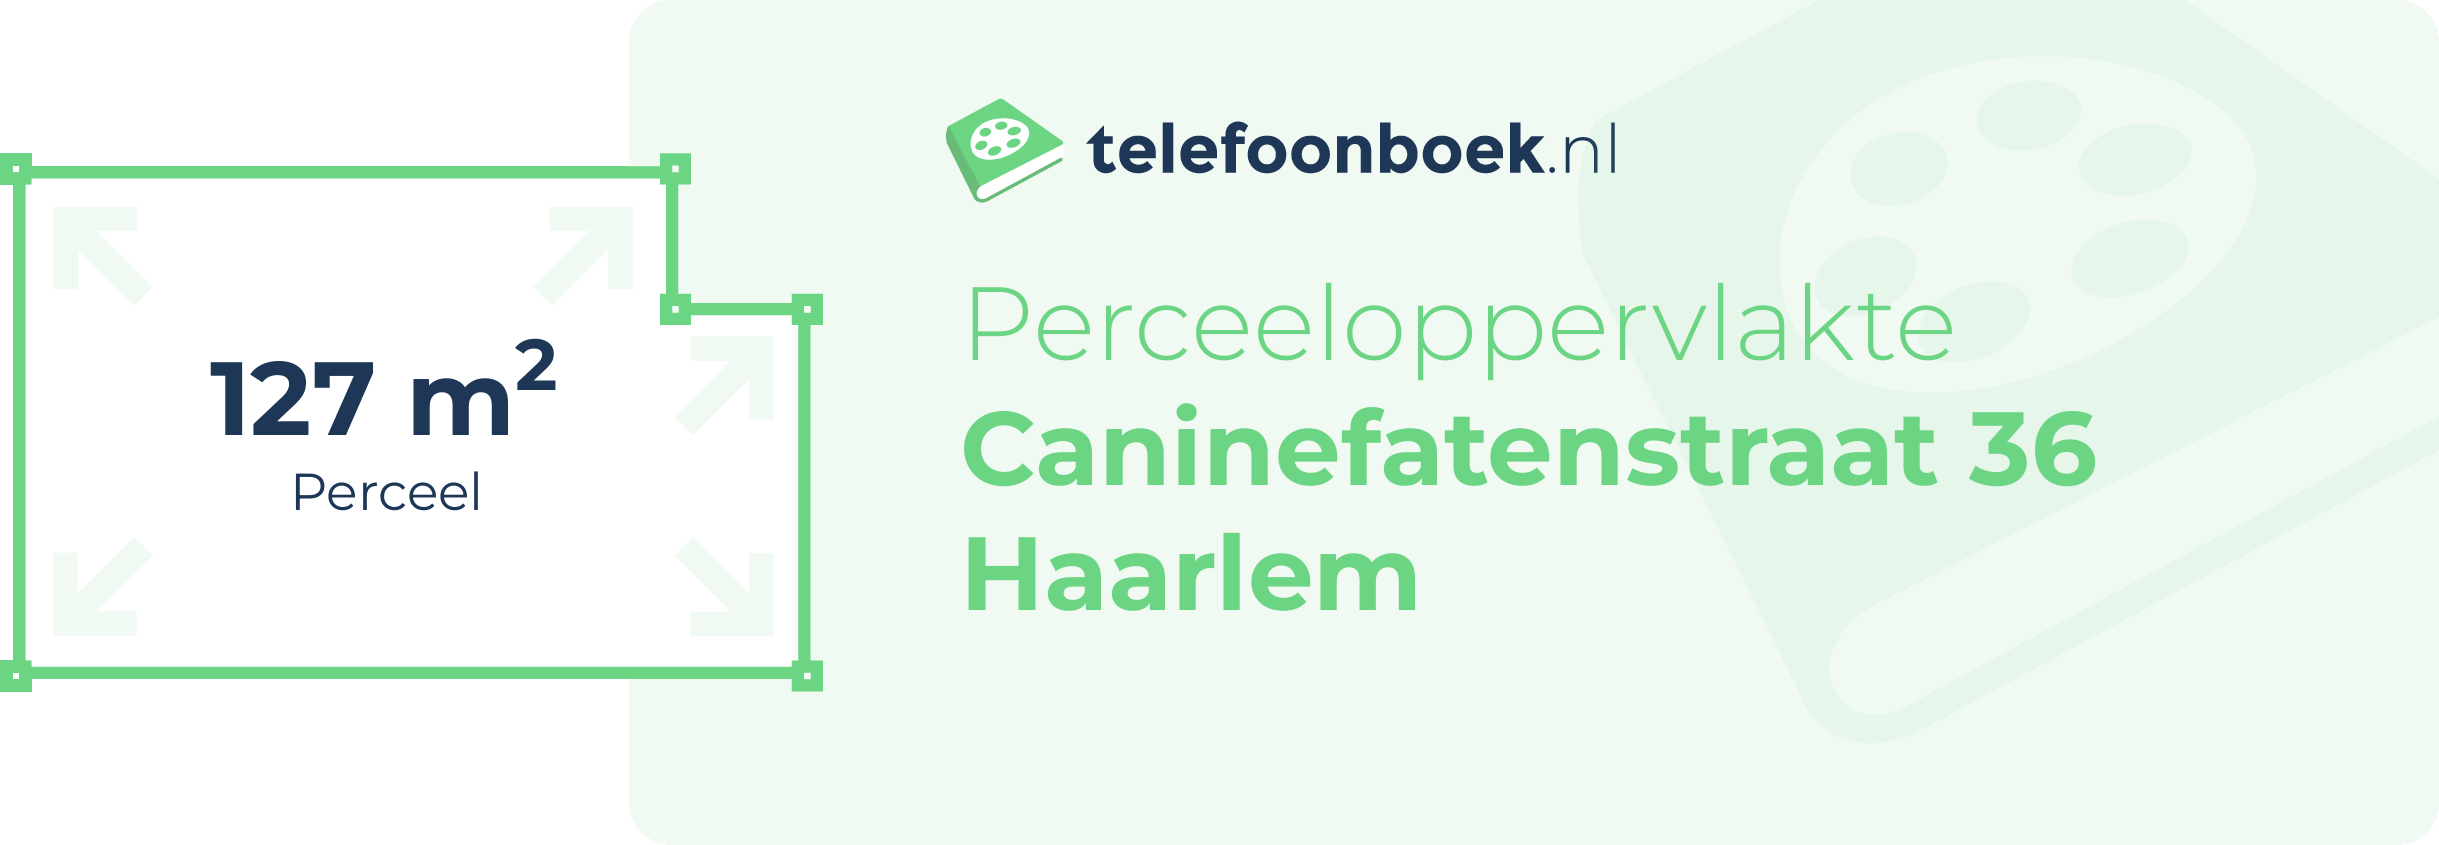 Perceeloppervlakte Caninefatenstraat 36 Haarlem